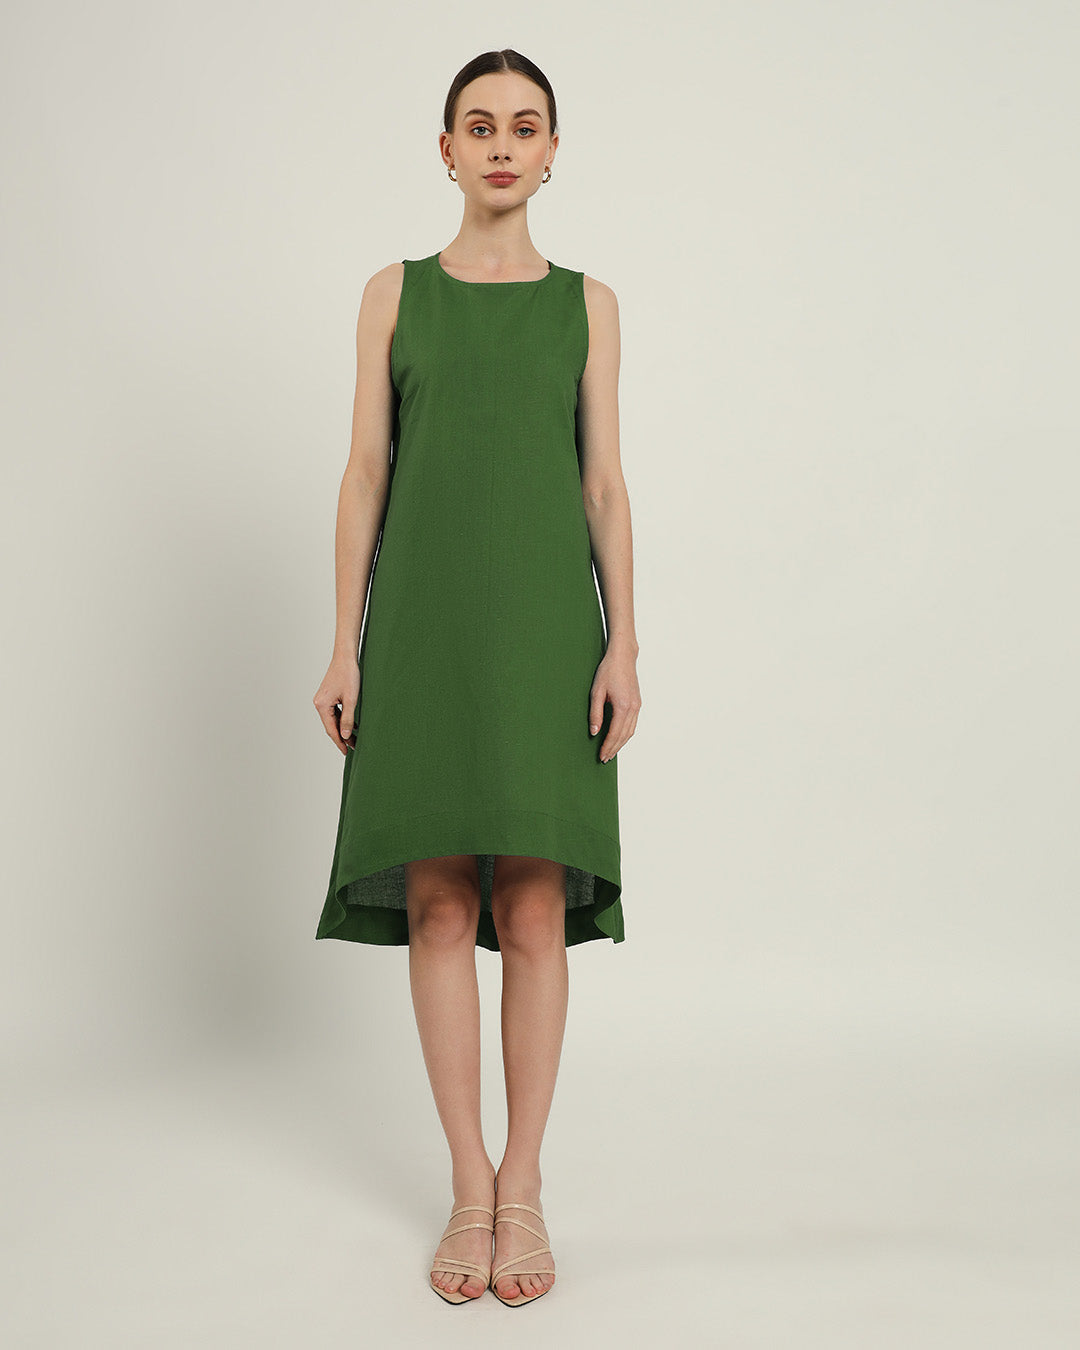 The Odesa Emerald Cotton Dress